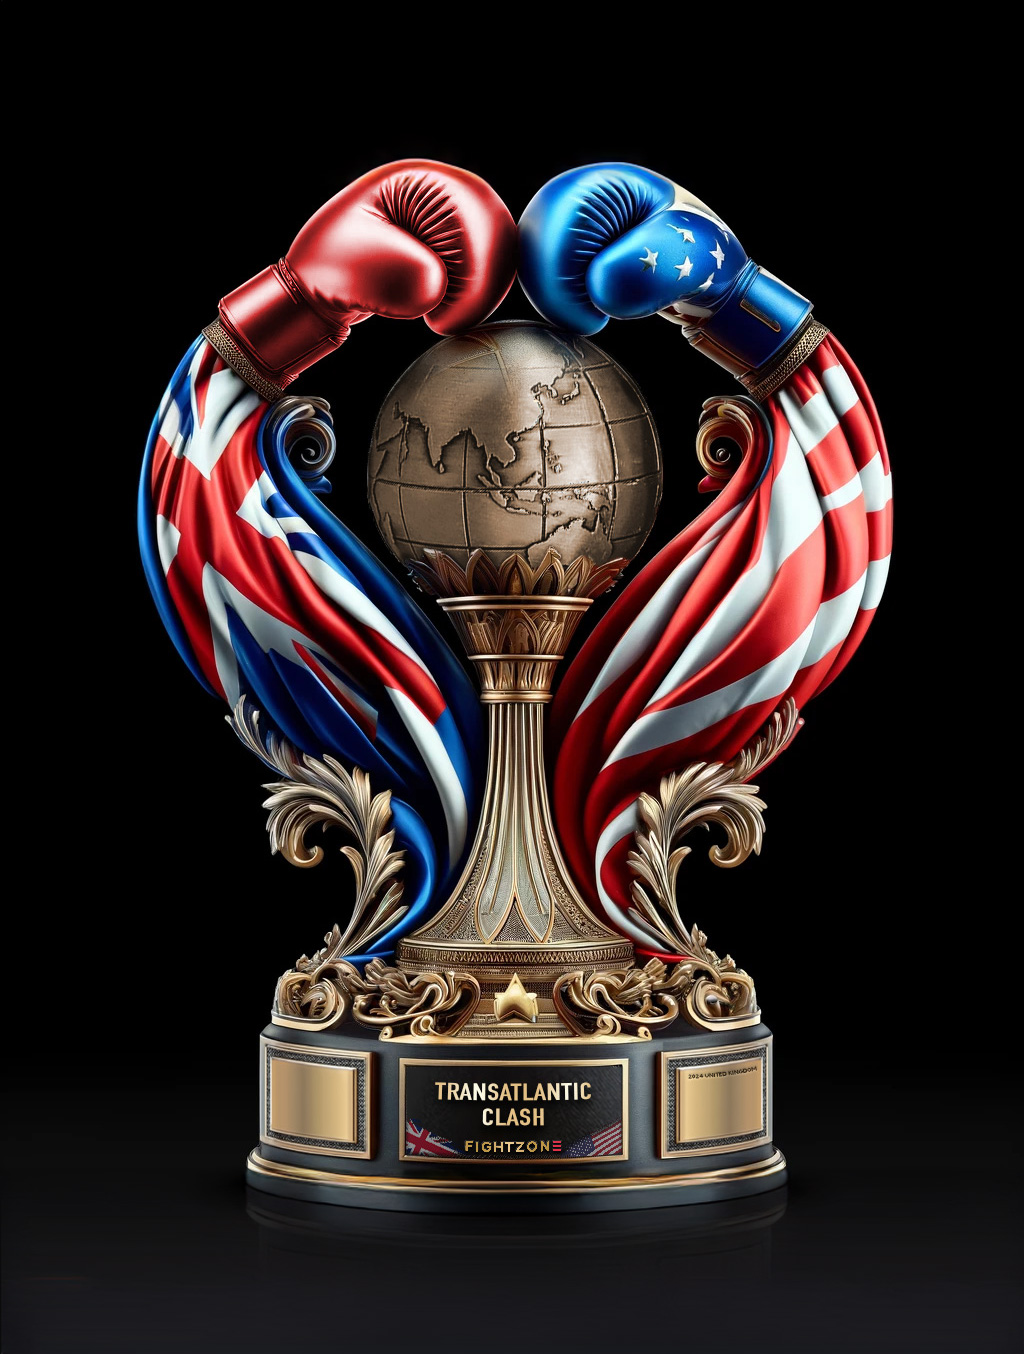 Transatlantic clash boxing Event Trophy